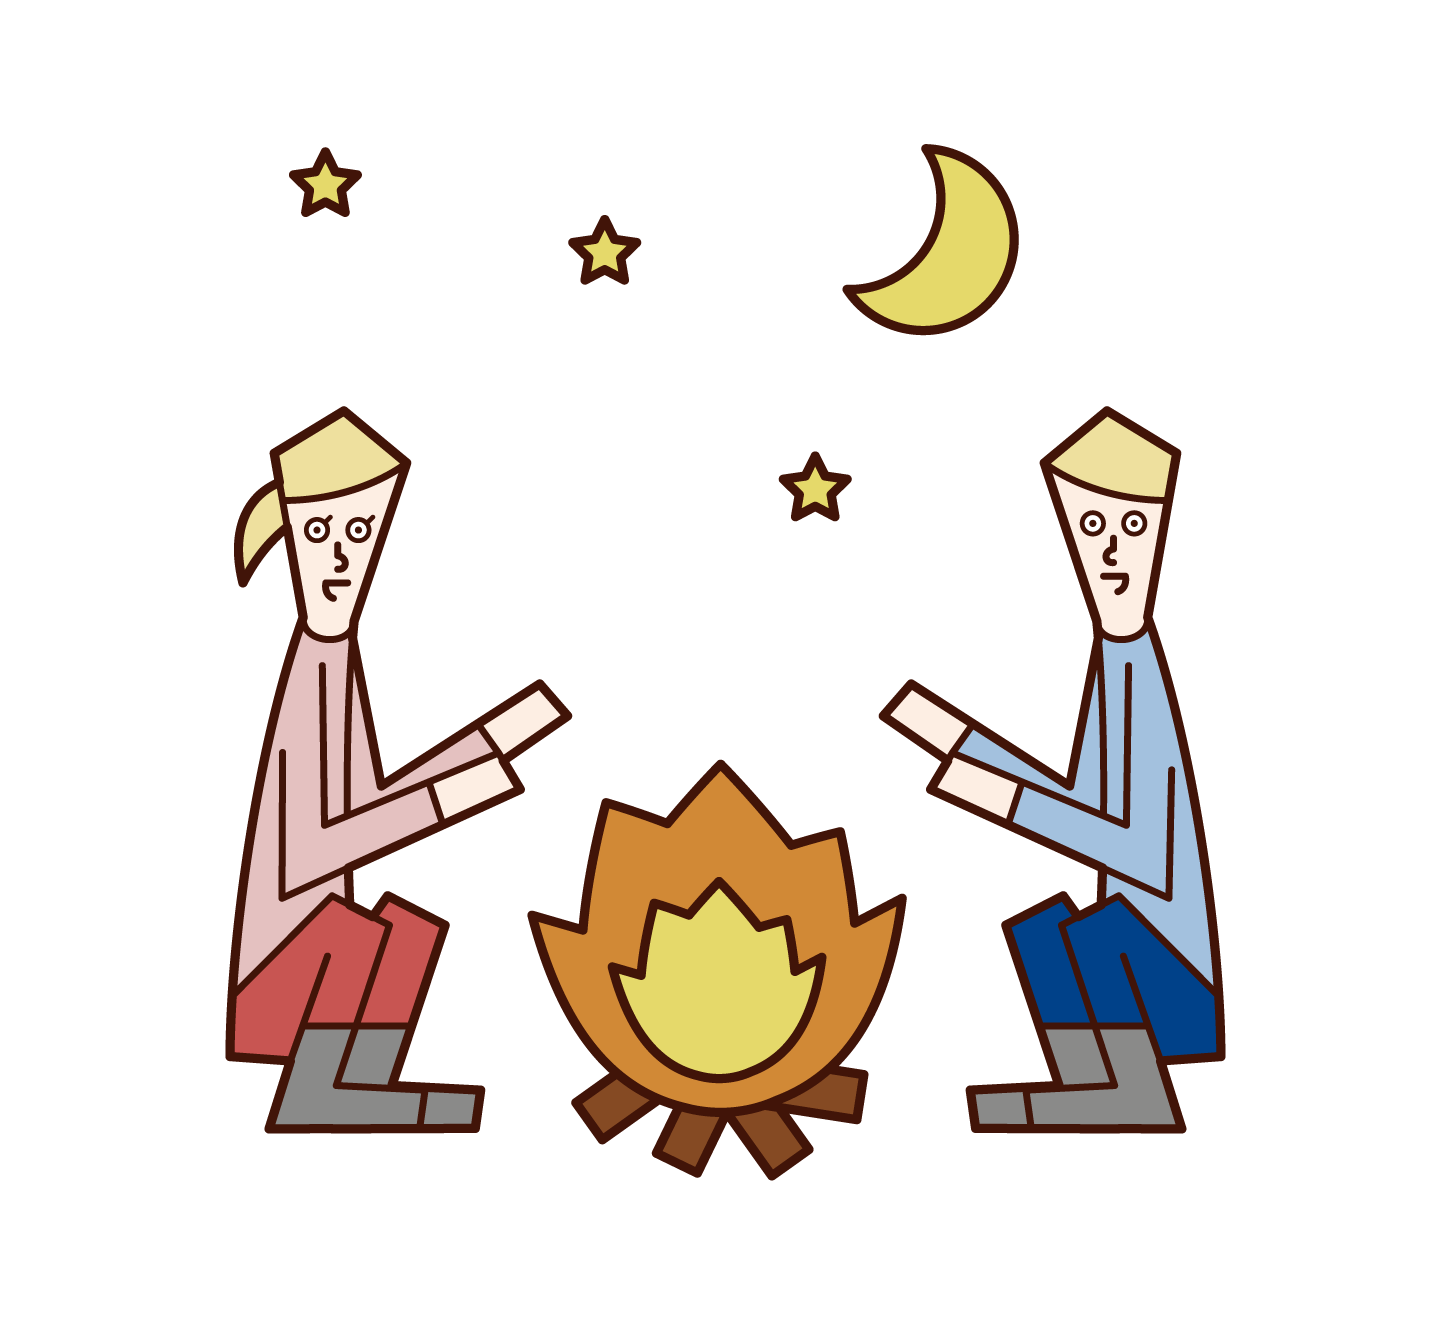 Campfire and Bonfire Illustration